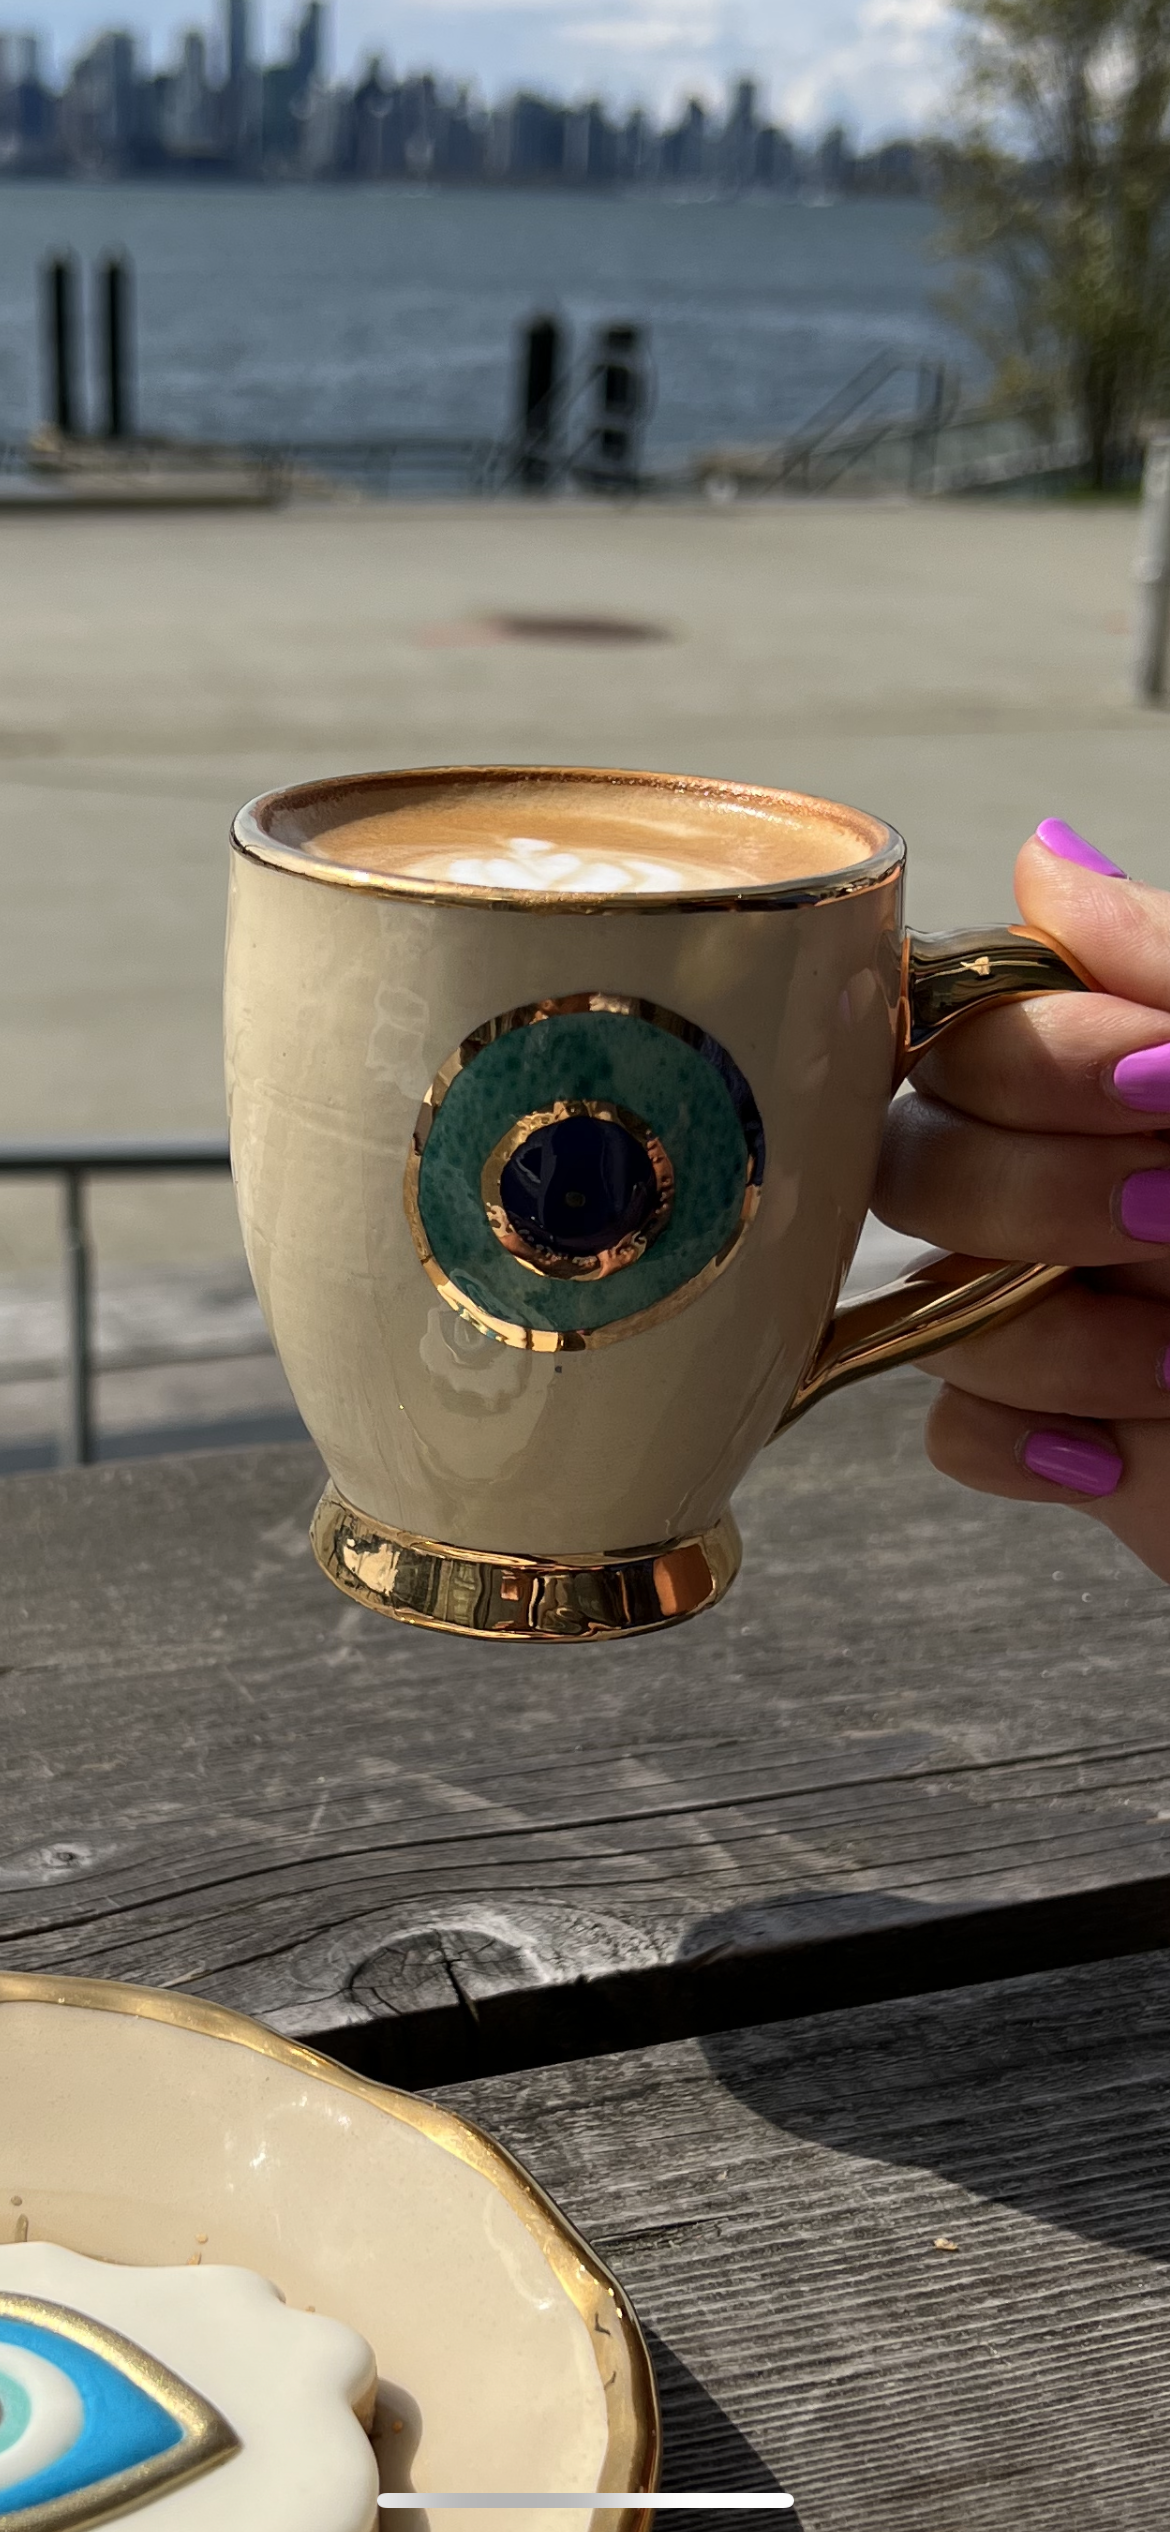 Evil Eye Ceramic mug - With a gold plated edge